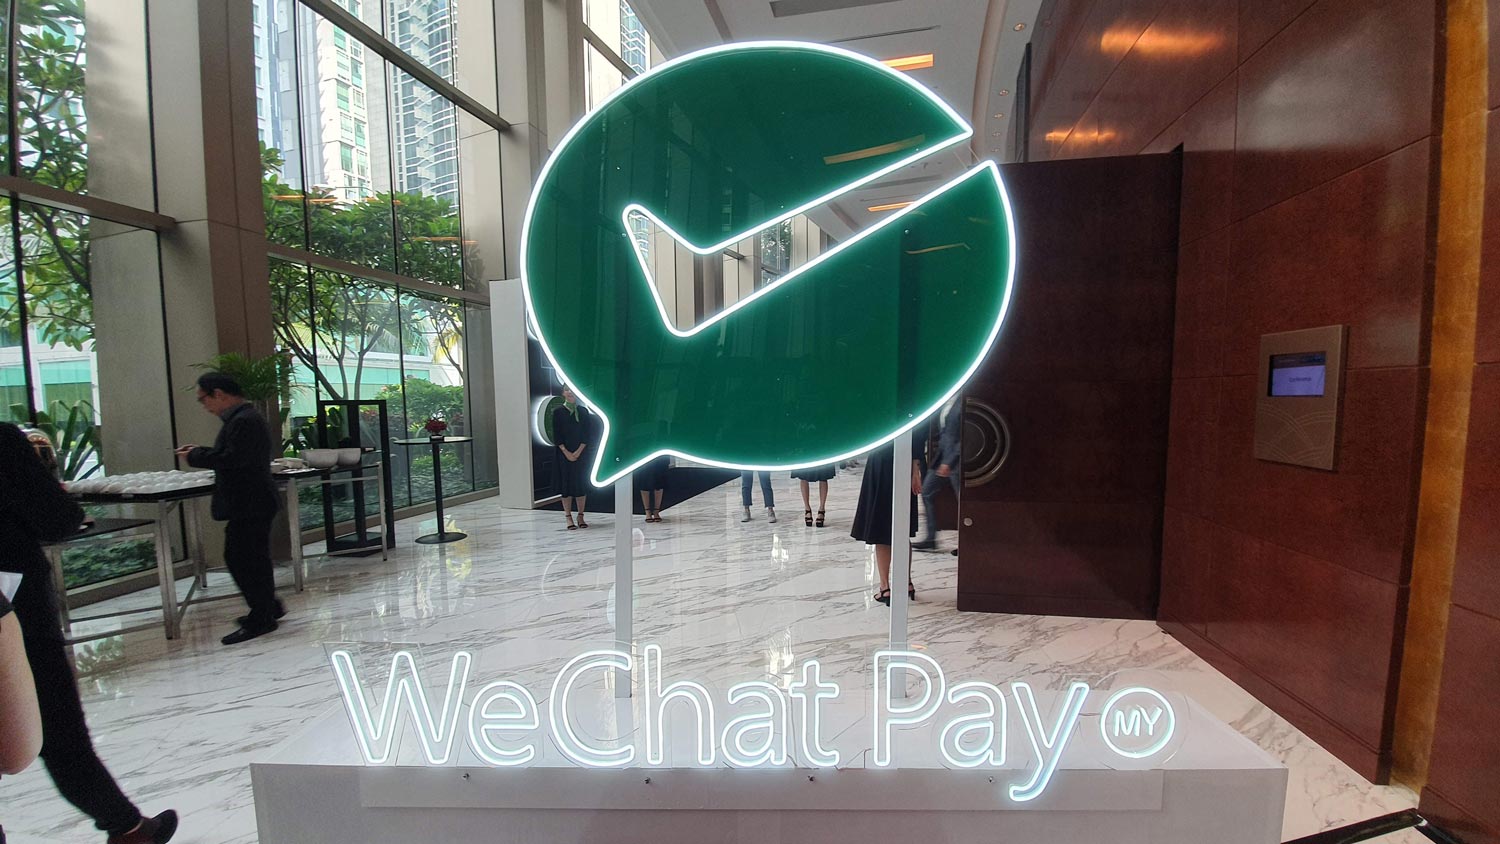 WeChat Pay MY Bakal Mengembangkan Pembayaran Nirtunai Di Restoran Dan Gerai-Gerai